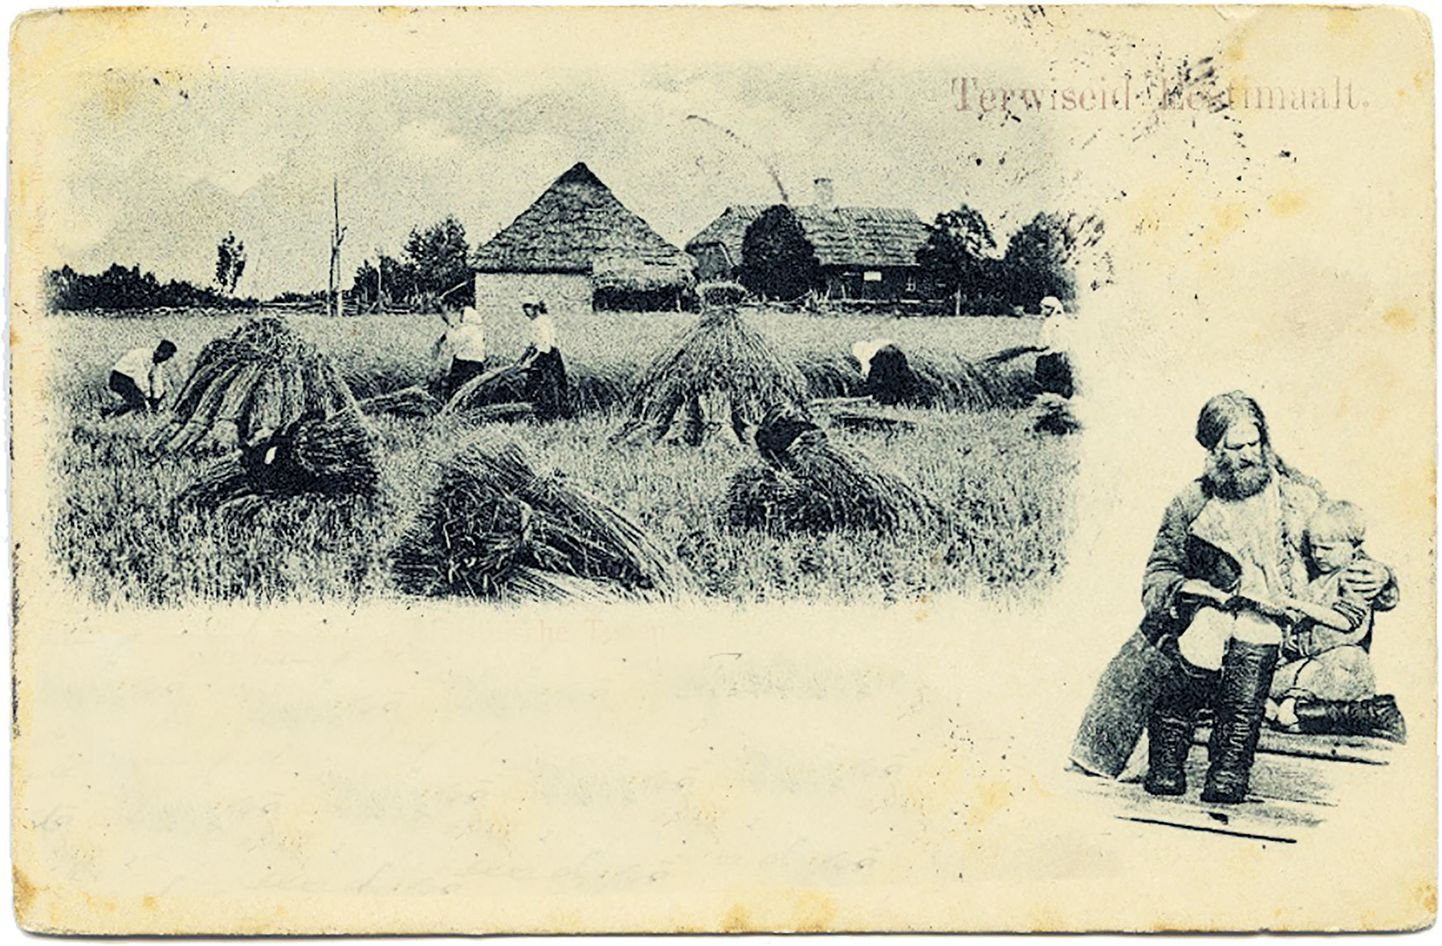 RUKKI HAKKIDESSE PANEK: Fotopostkaart 1900ndate algusest, seeriast "Estnische typen" ehk Eesti inimesed.